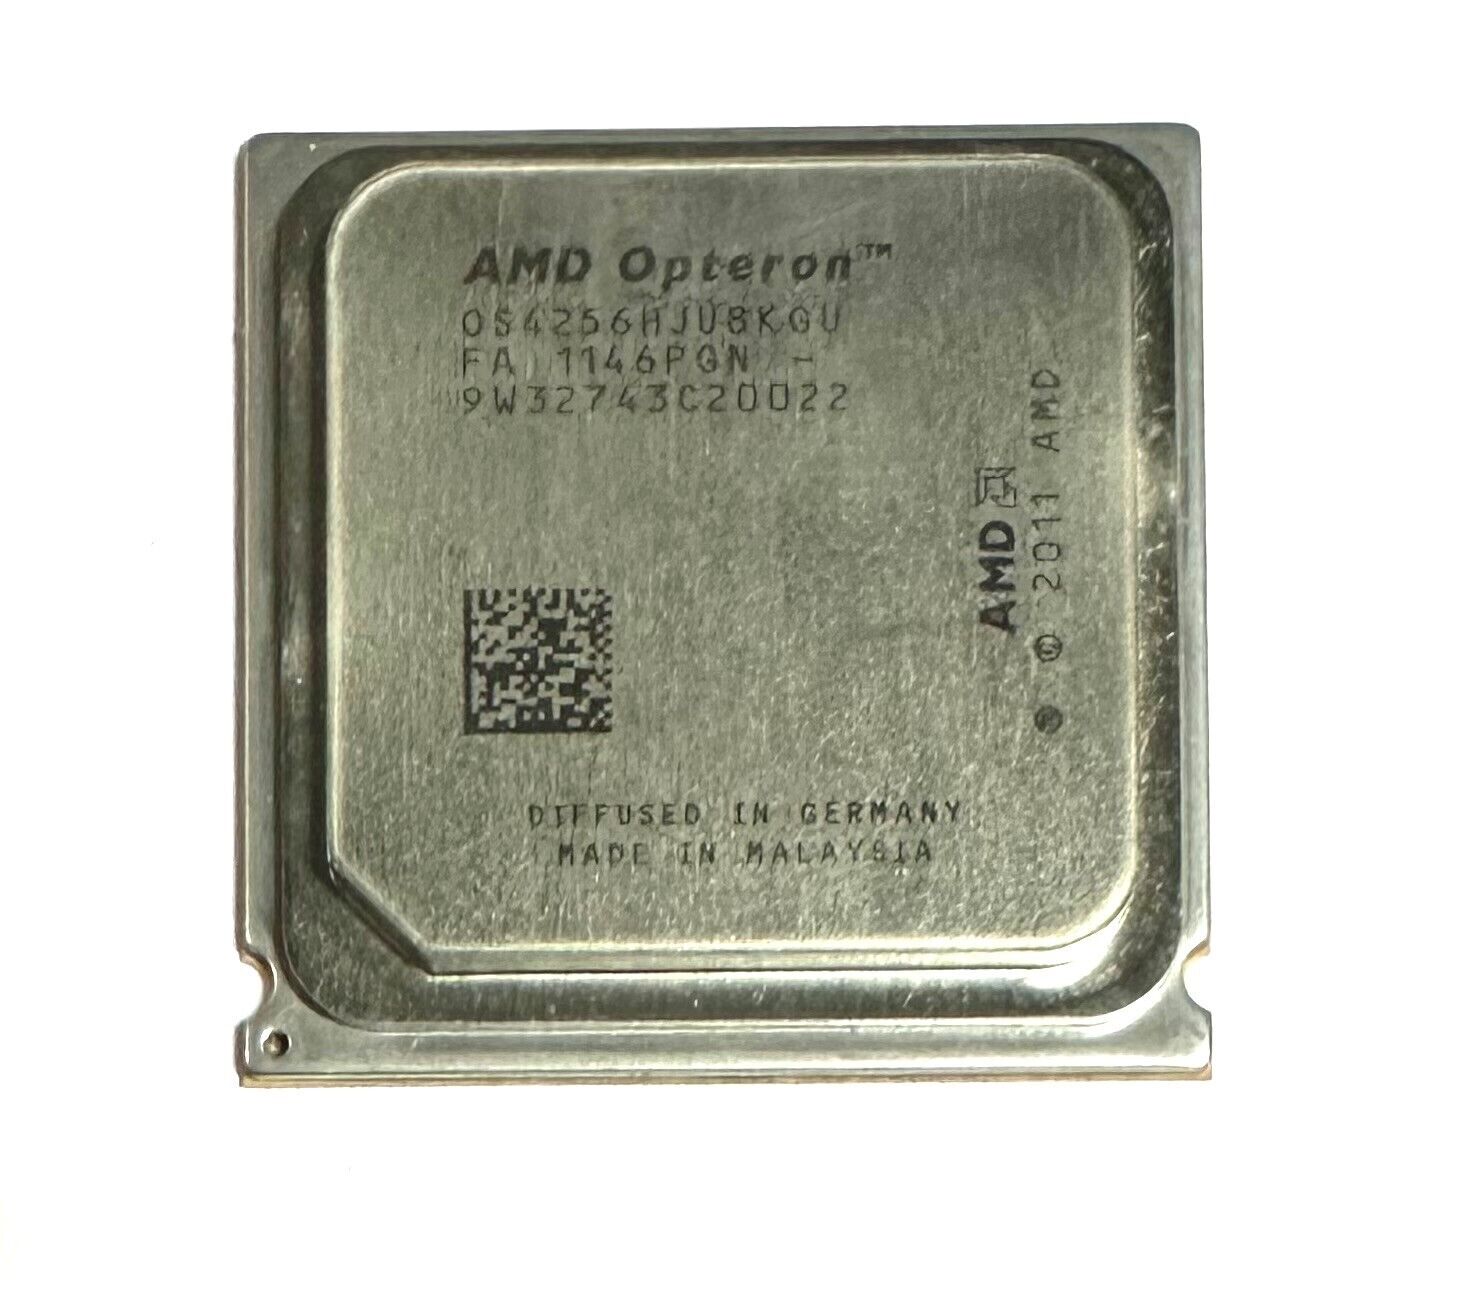 OS4256HJU8KGU AMD Opteron 8-Core 1.6GHz/8M/ C32 CPU 4256 EE